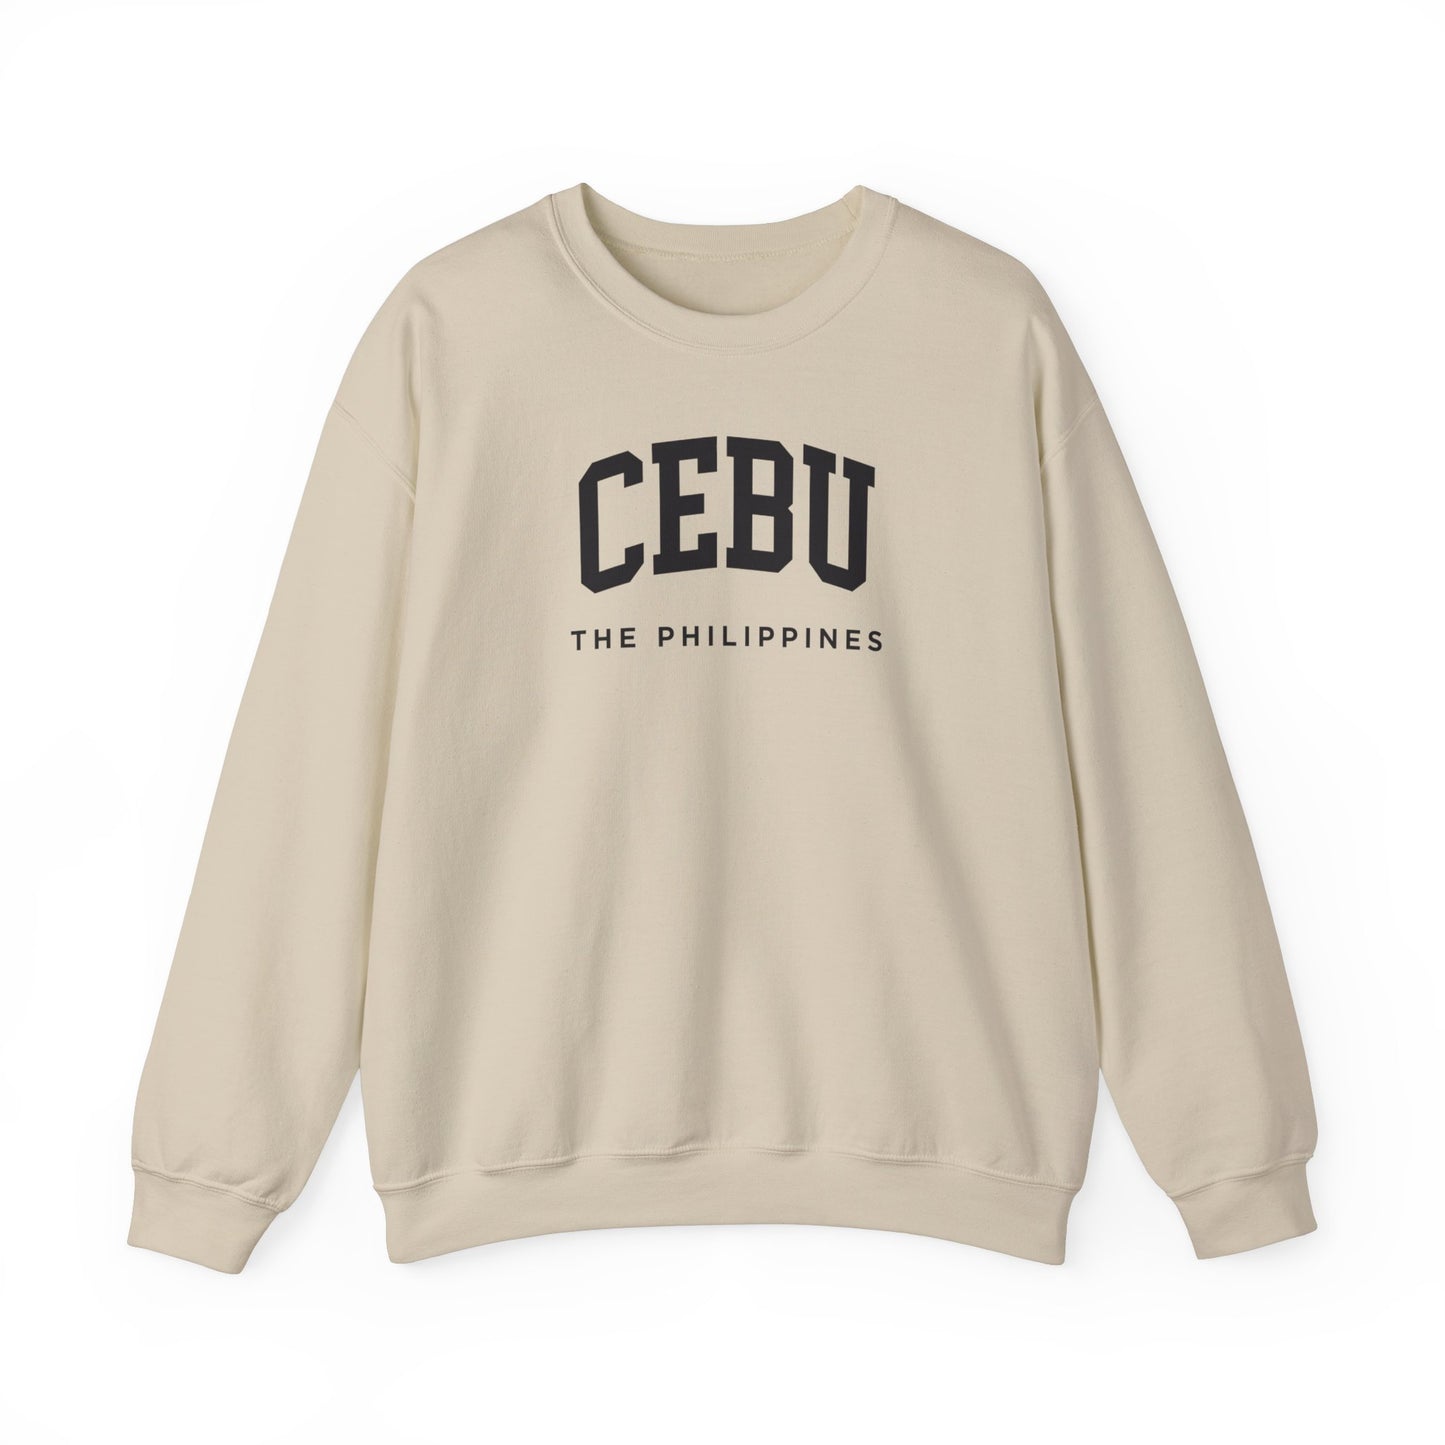 Cebu Philippines Sweatshirt